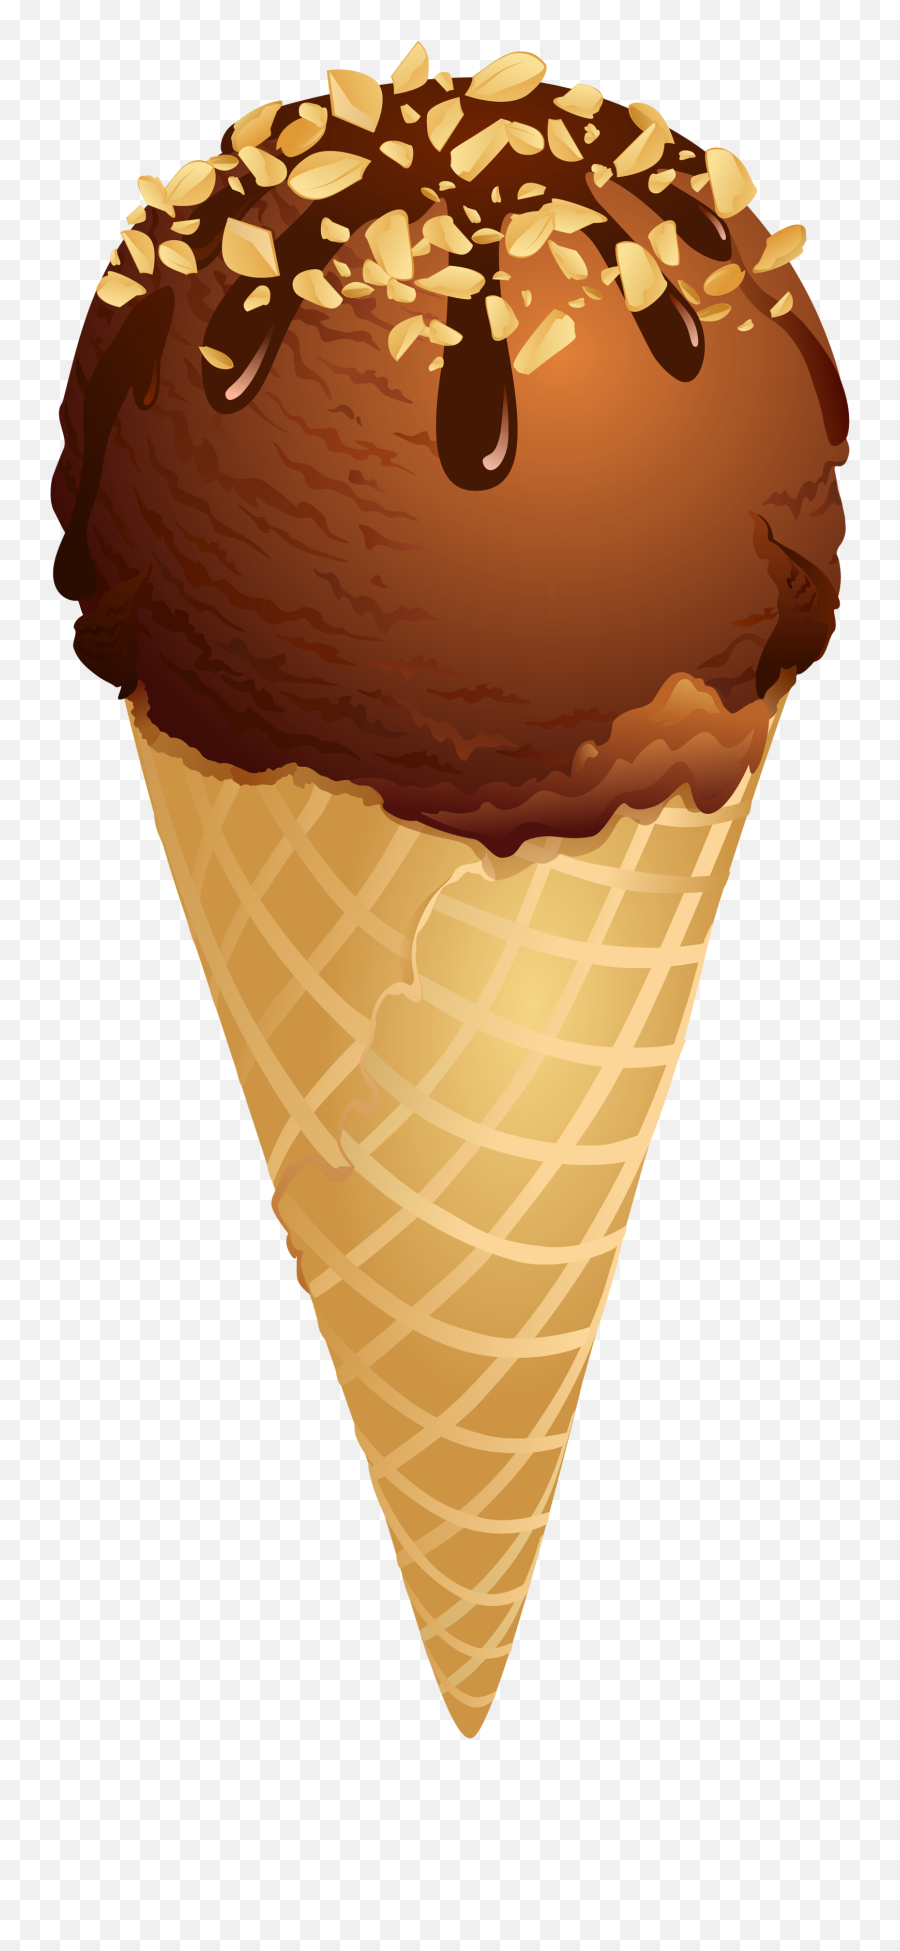 Download Ice Cream Cone Png File - Transparent Background Ice Cream Clipart,Ice Cream Cone Transparent